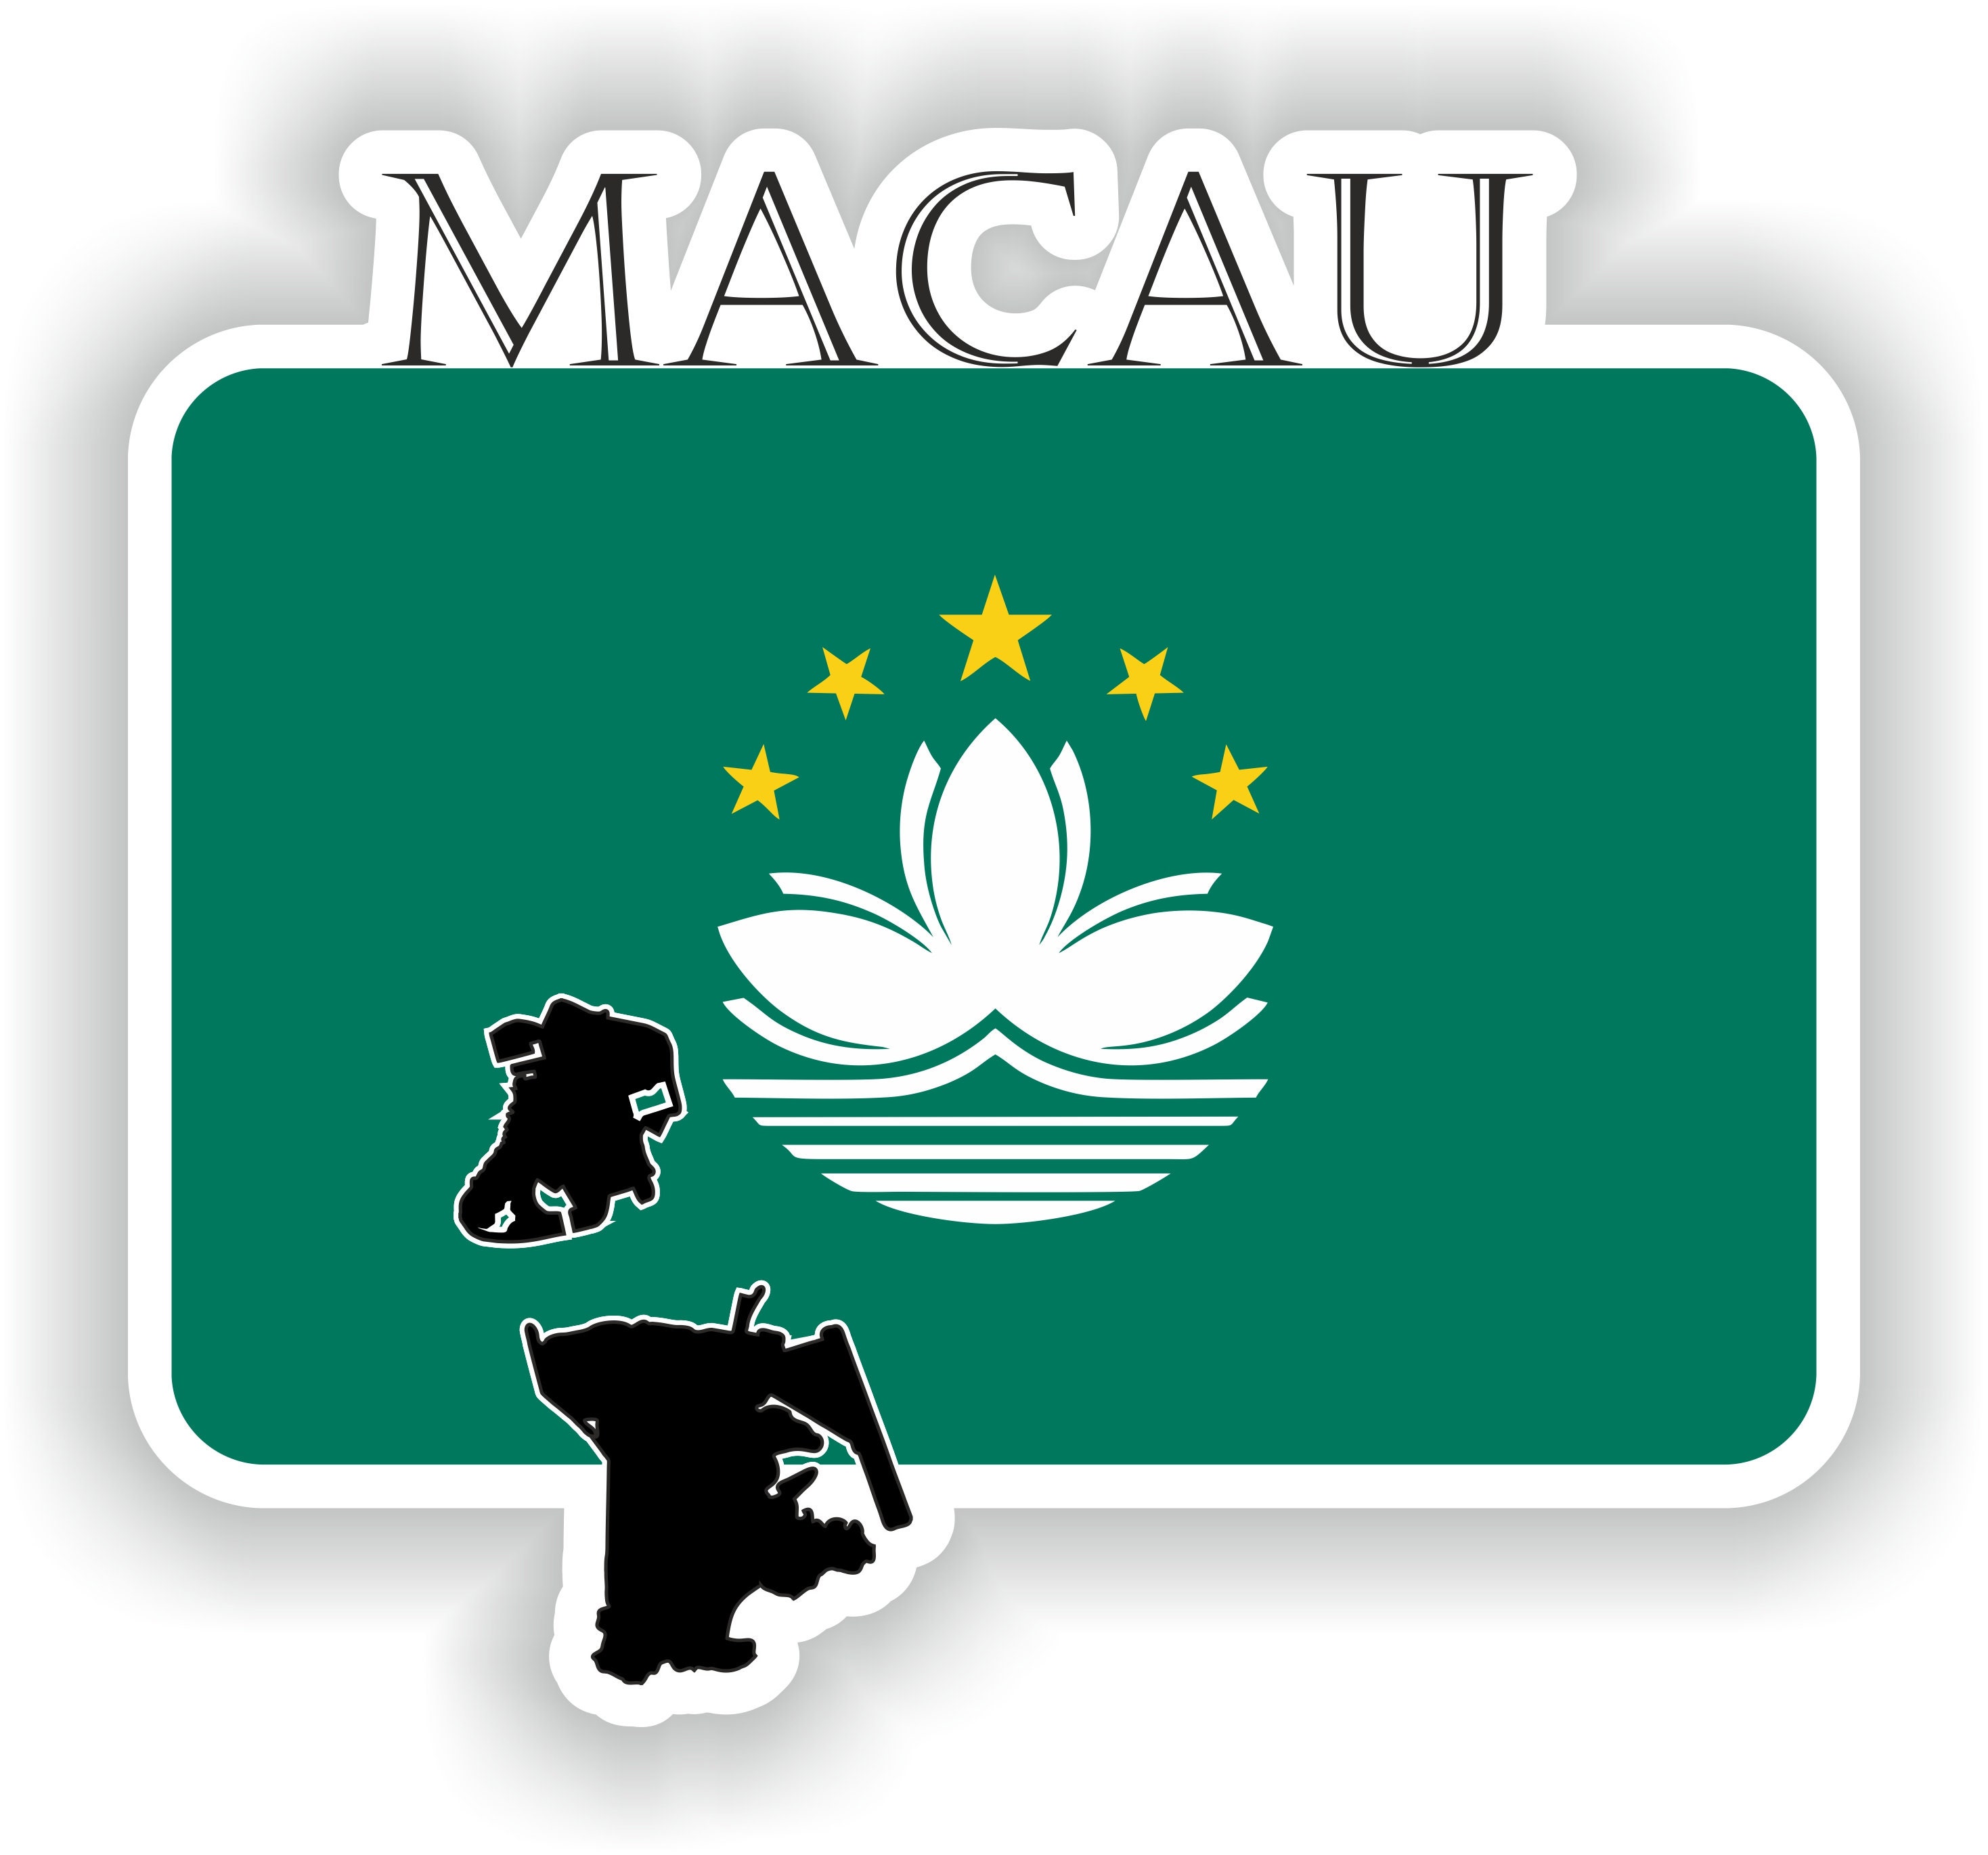 Macau Sticker Flag MF for Laptop Book Fridge Guitar Motorcycle